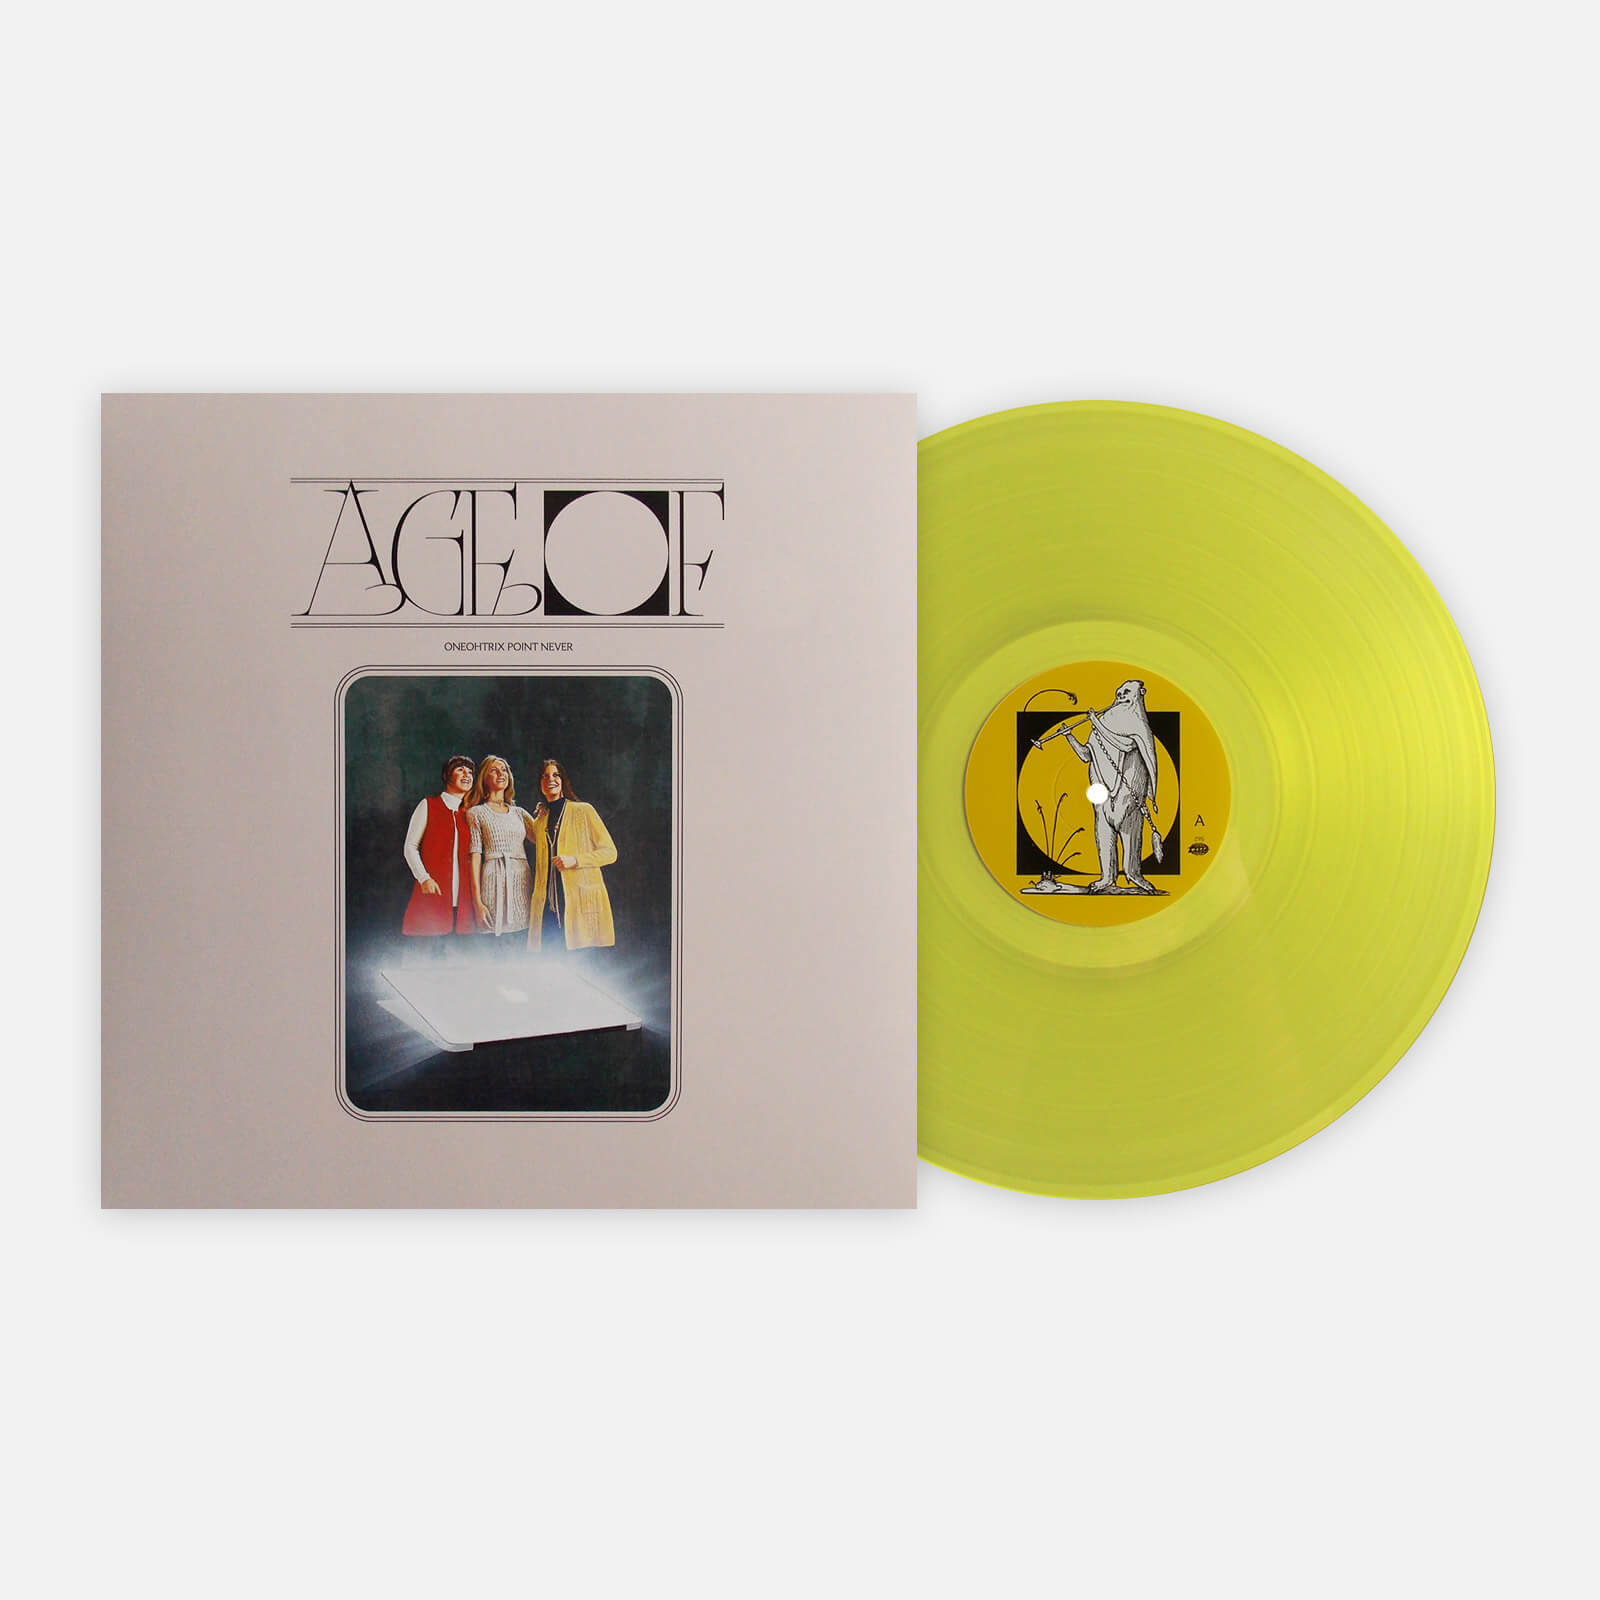 Oneohtrix Point Never 'Age Of' (Neon Yellow Vinyl, LTD to 750)